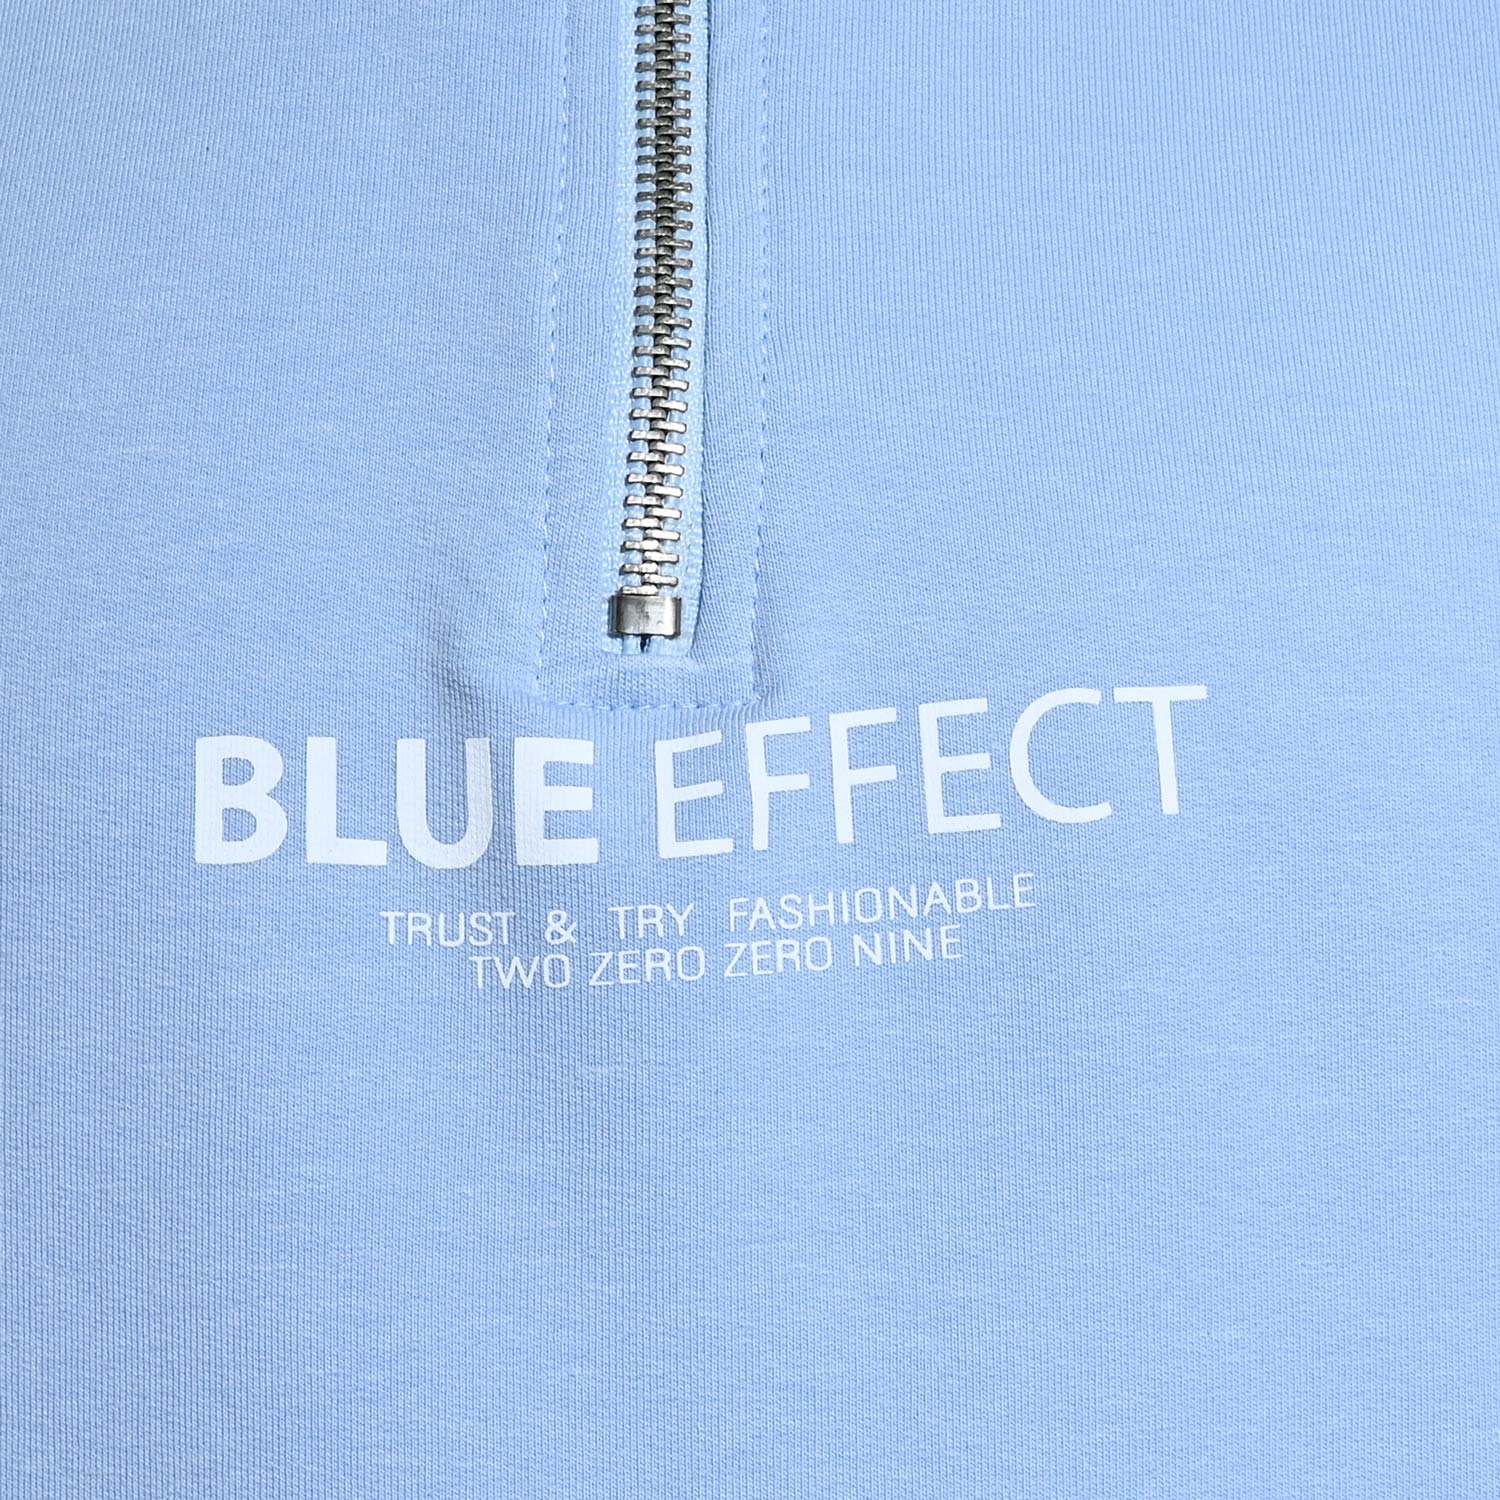 6350-Boys Sweatshirt -Blue Effect